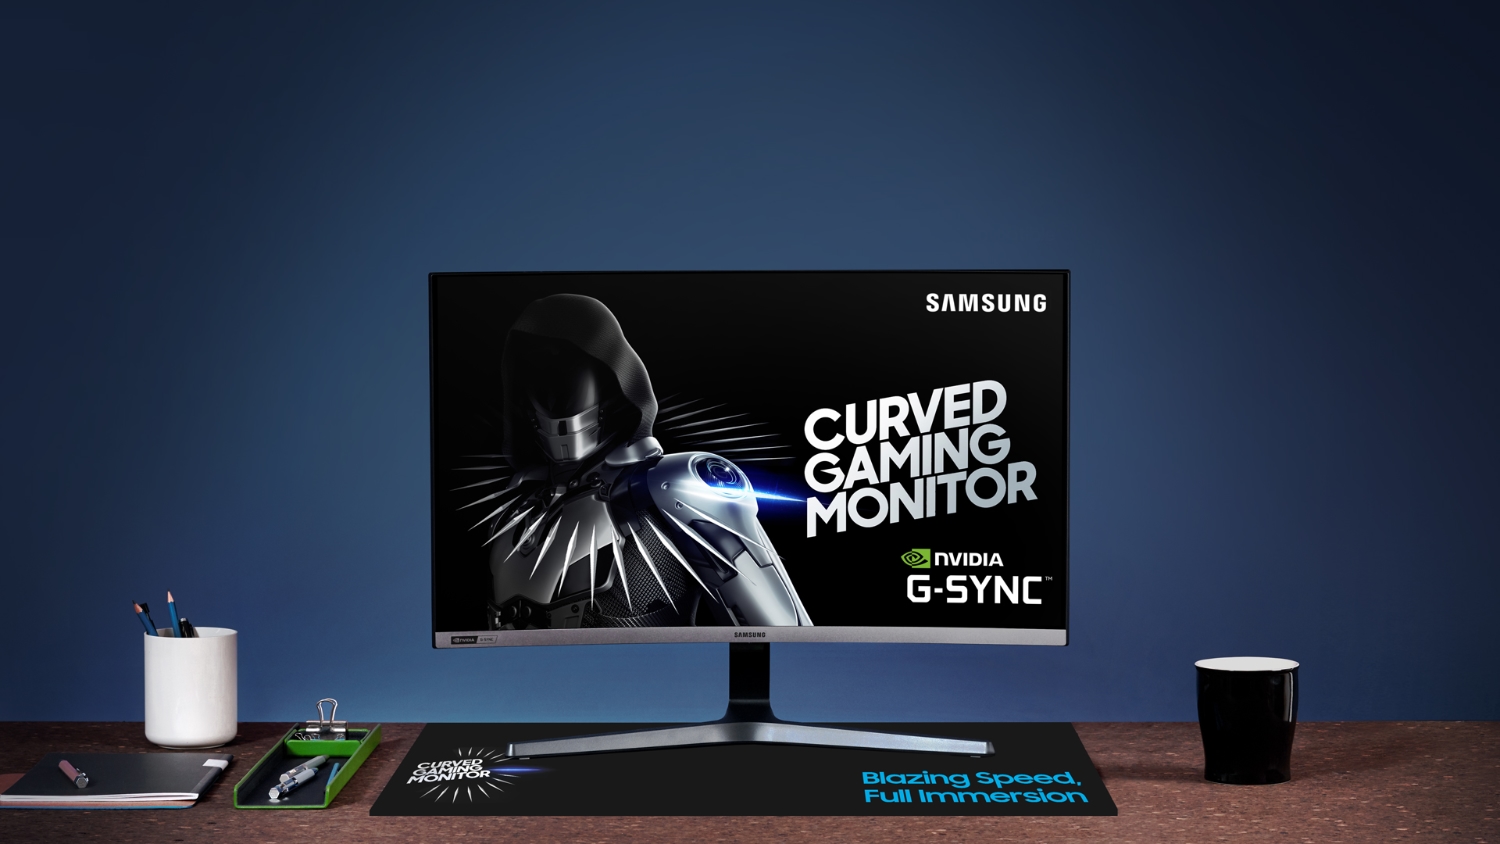 Samsung anunciou seu primeiro monitor de 240 Hz antes do programa de jogos para PC durante a E3 2019